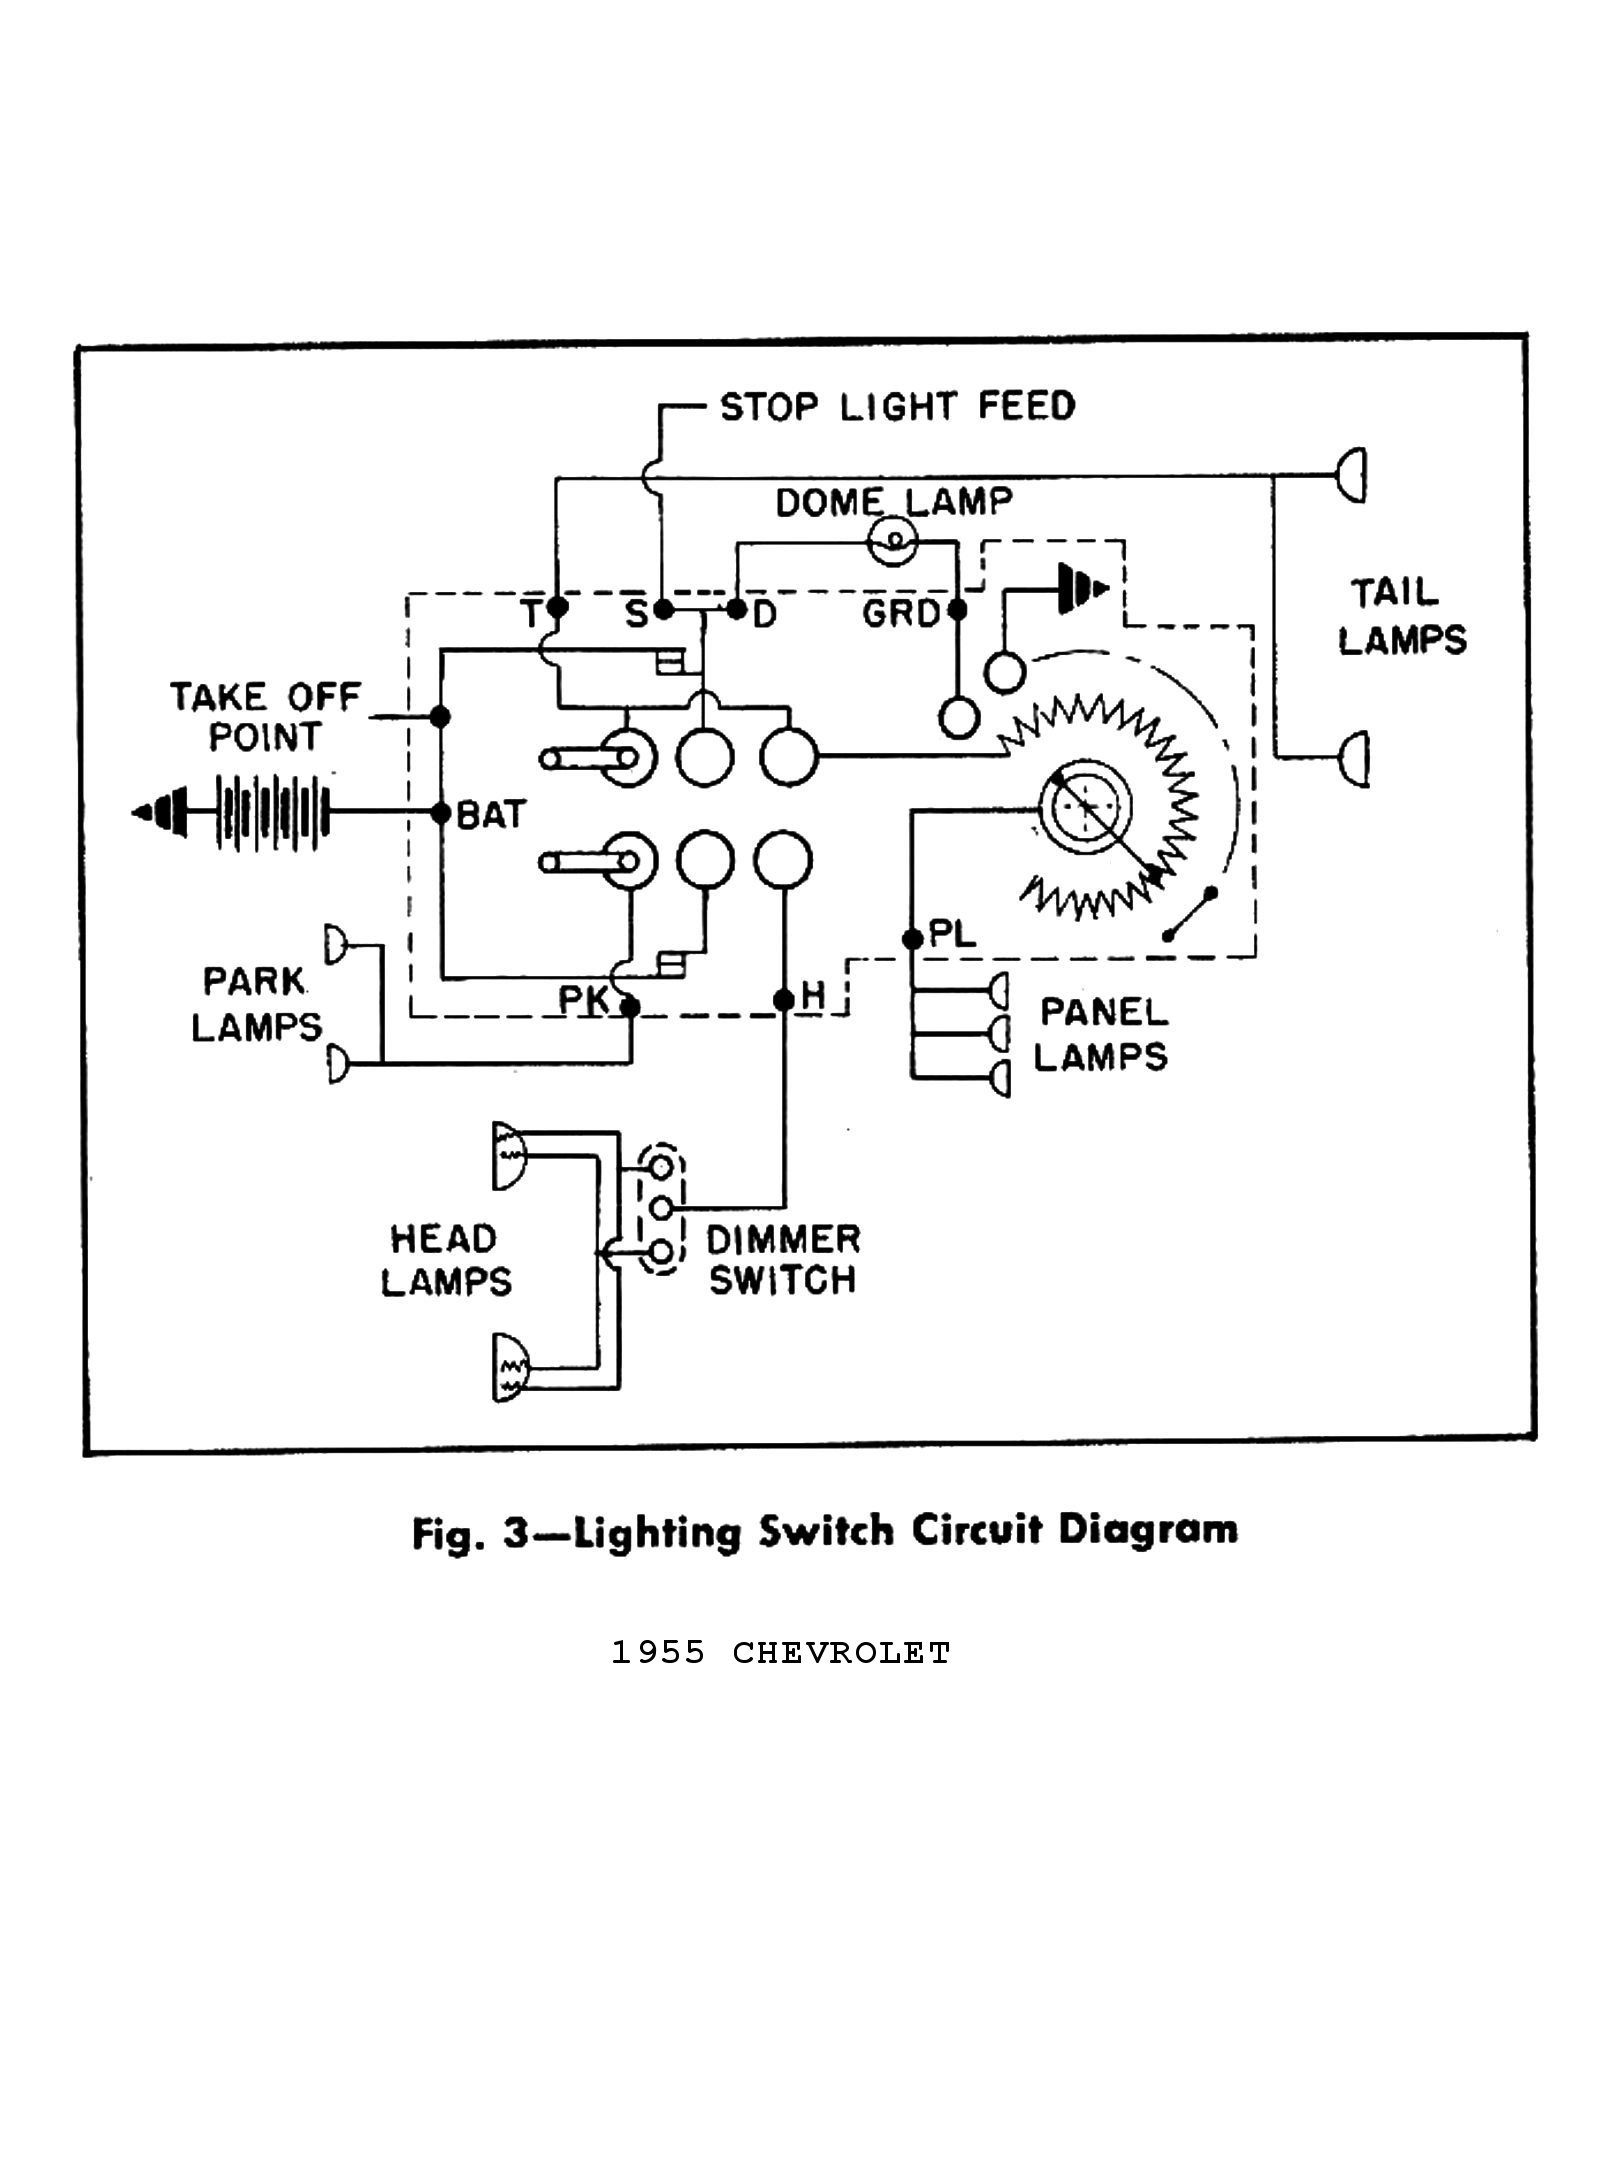 Chevy Dimmer Switch Wiring Diagram - Wiring Diagram Online - Dimmer Switch Wiring Diagram